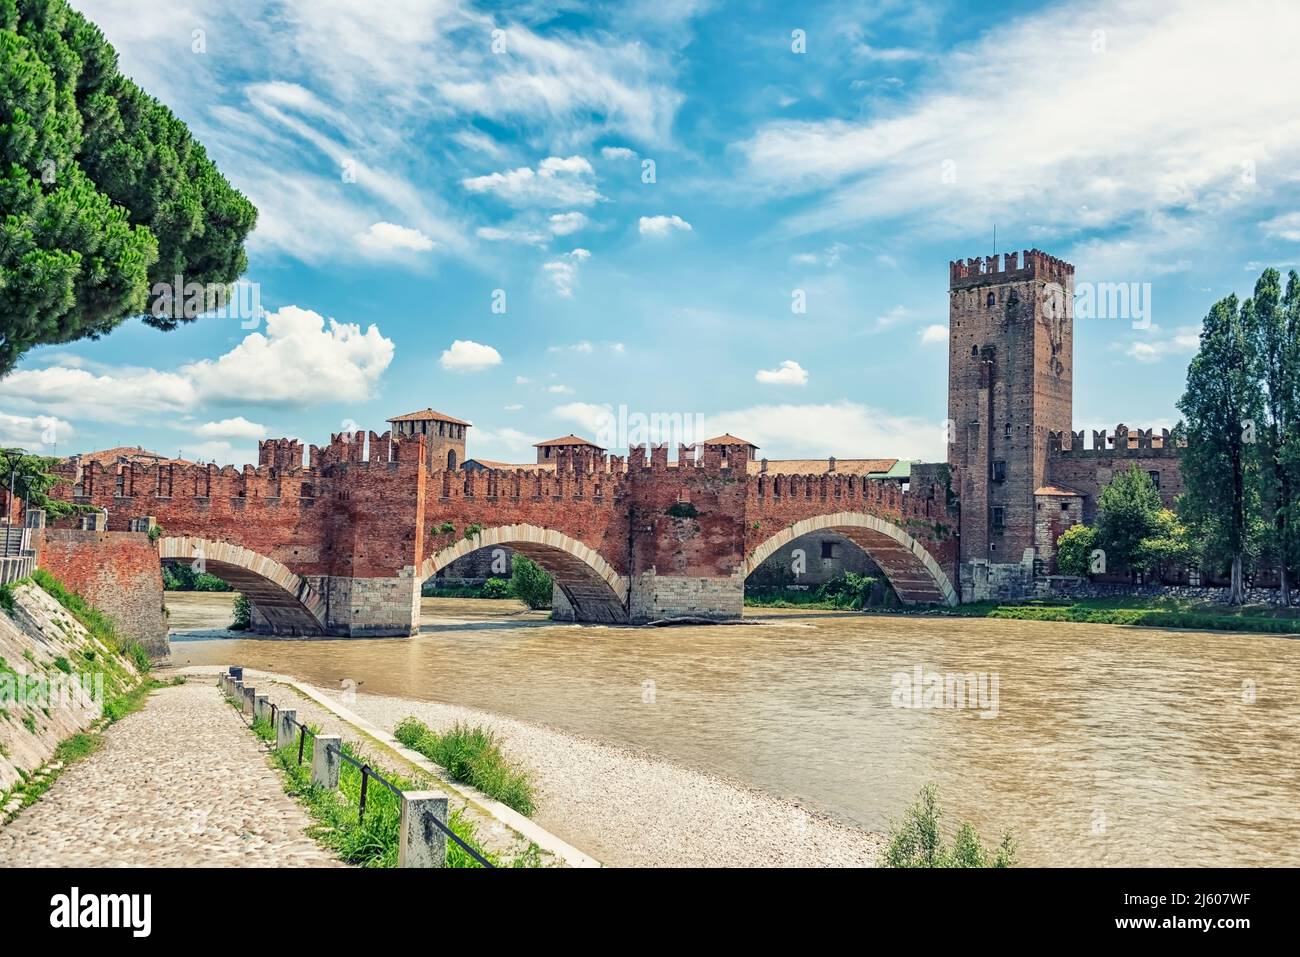 Old bridge in Verona city, Italy Stock Photo